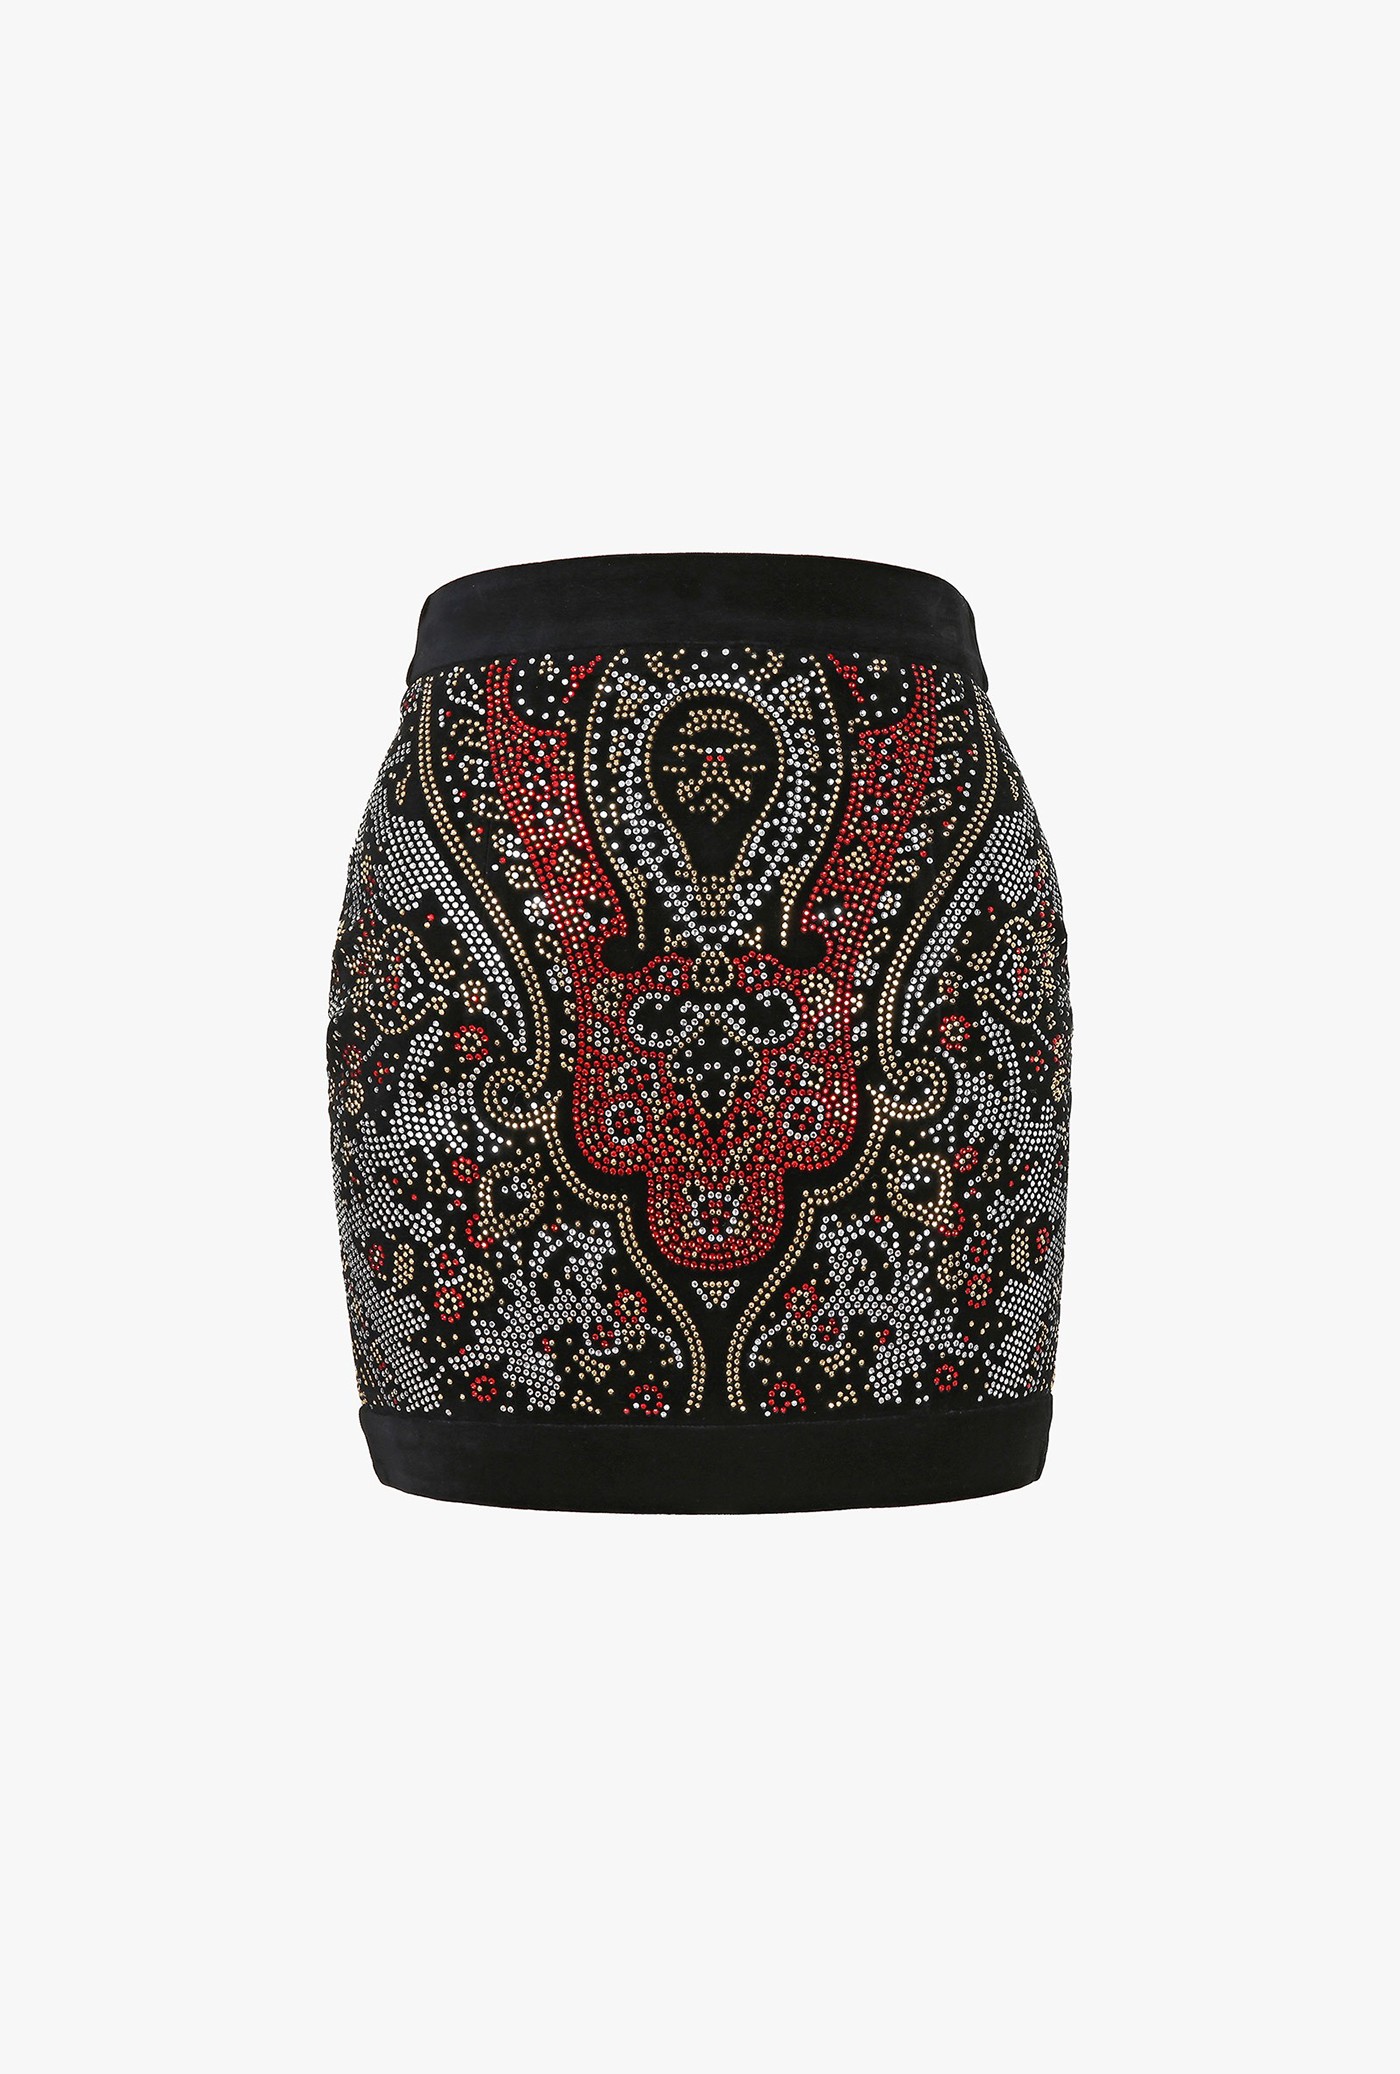 Balmain strass rhinestones crystal studs Studded Embellished Swarovski dress skirt